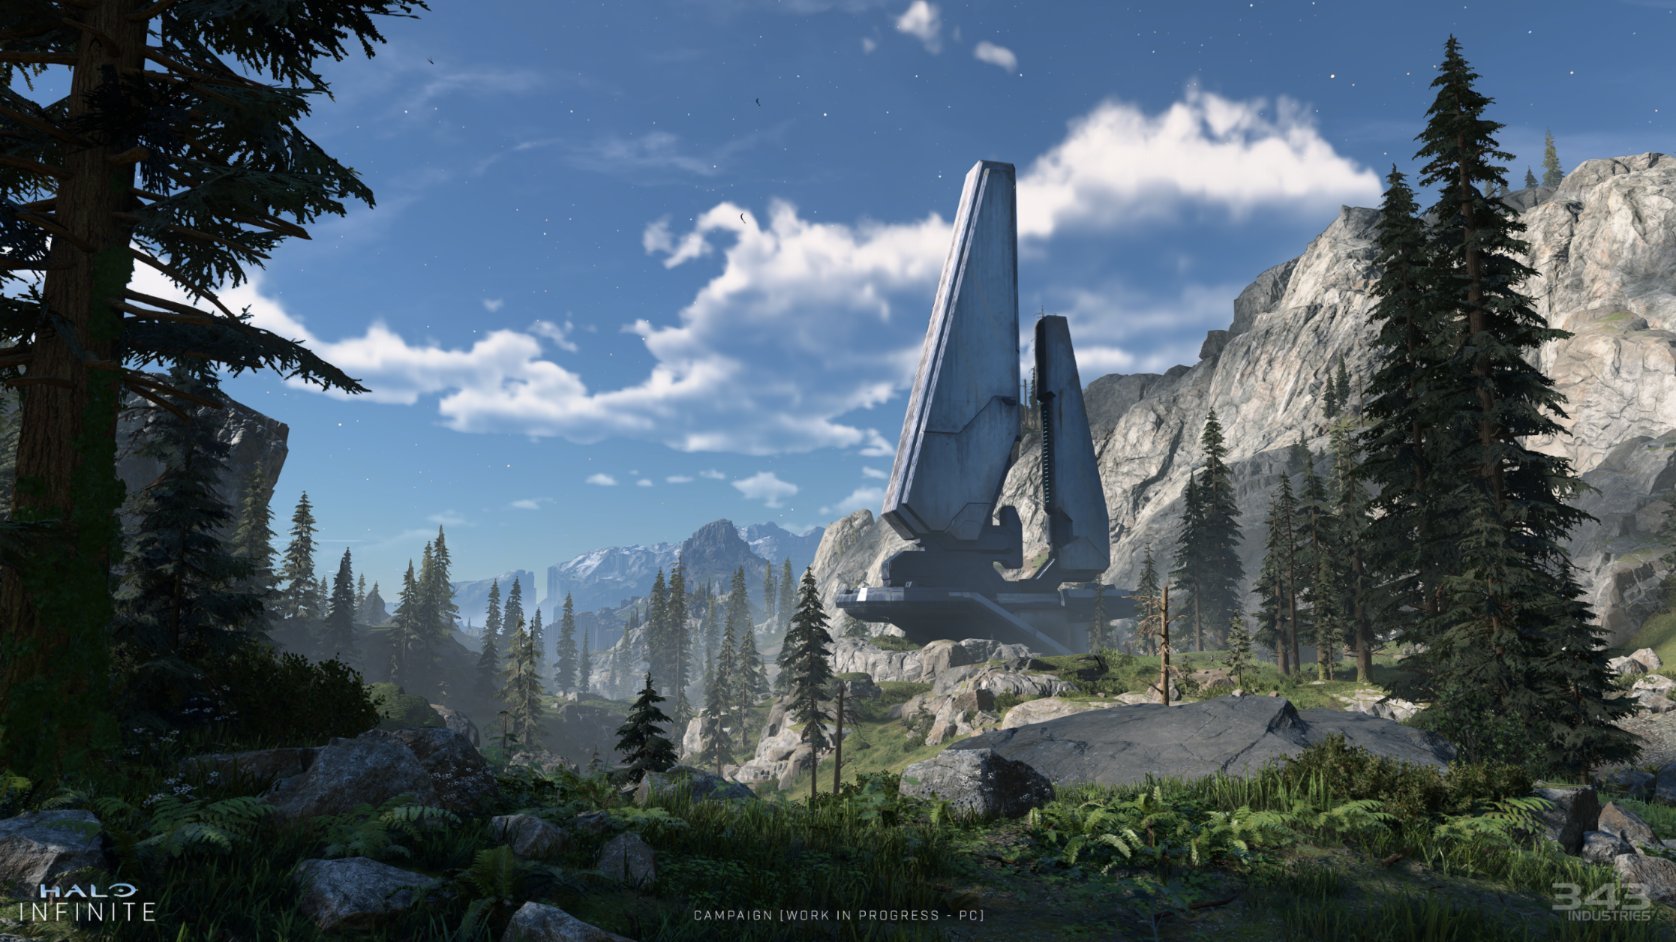 Halo Infinite world design details shown off in new update | Windows Central